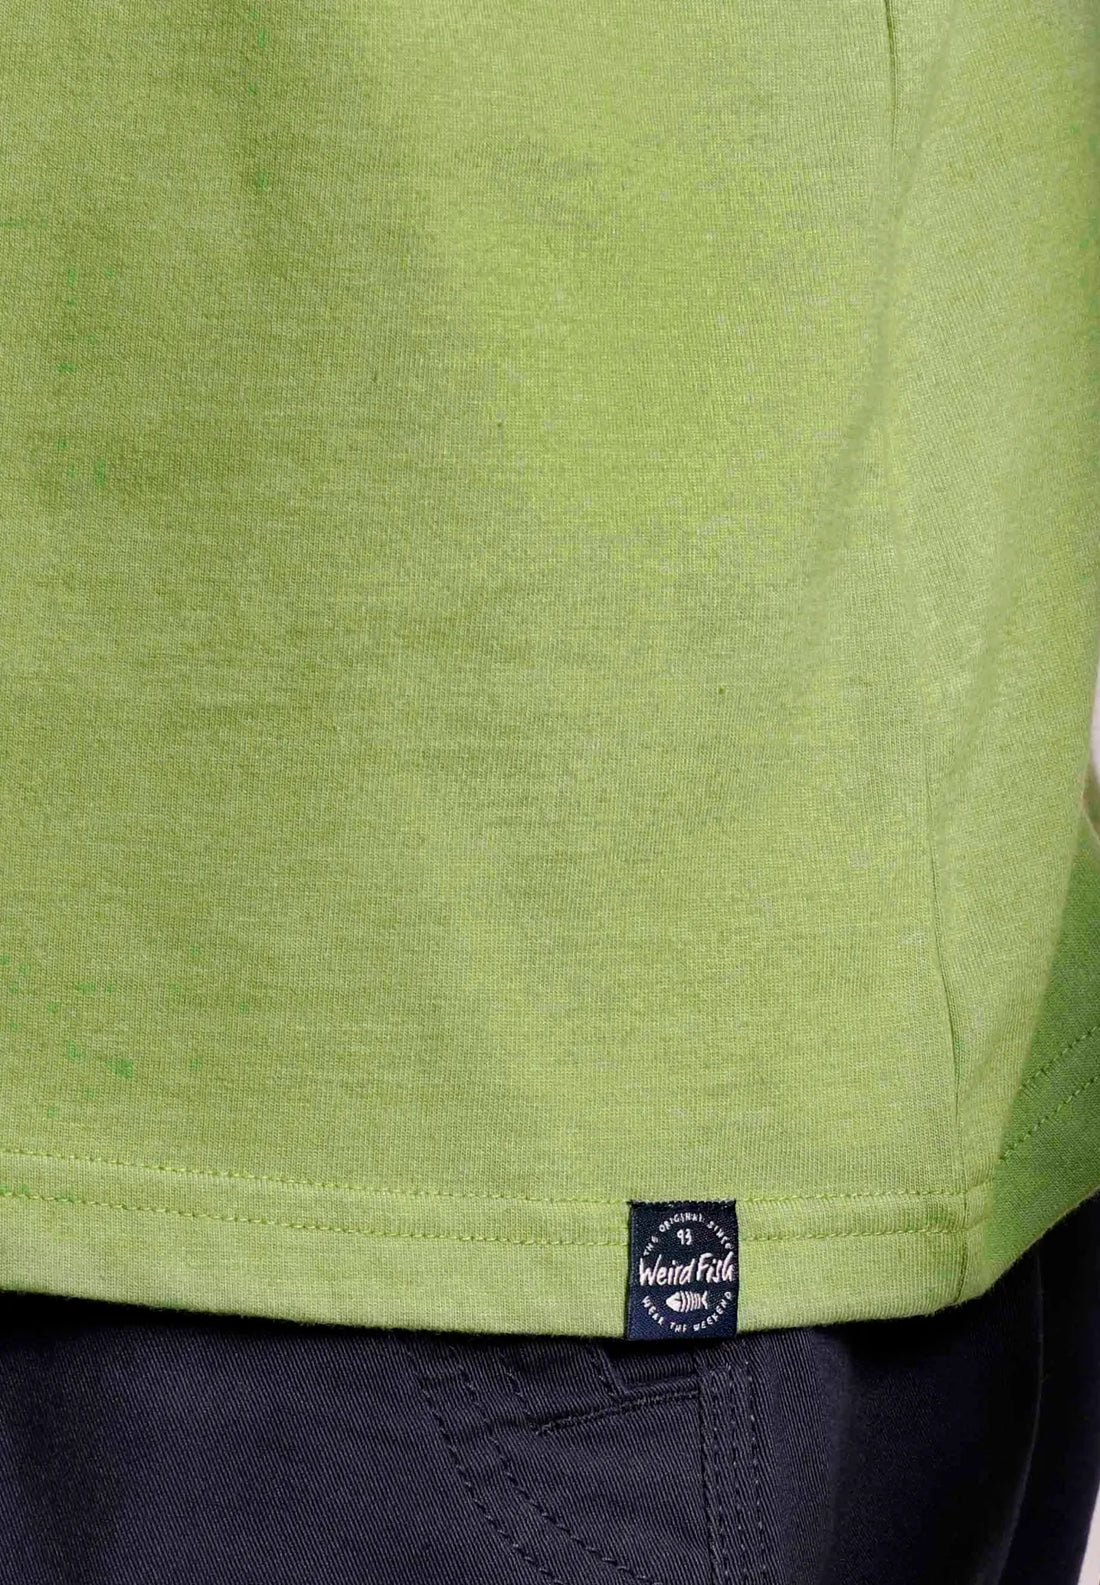 Weird Fish men's Paddle T-shirt in Kiwi Green with hem logo label.